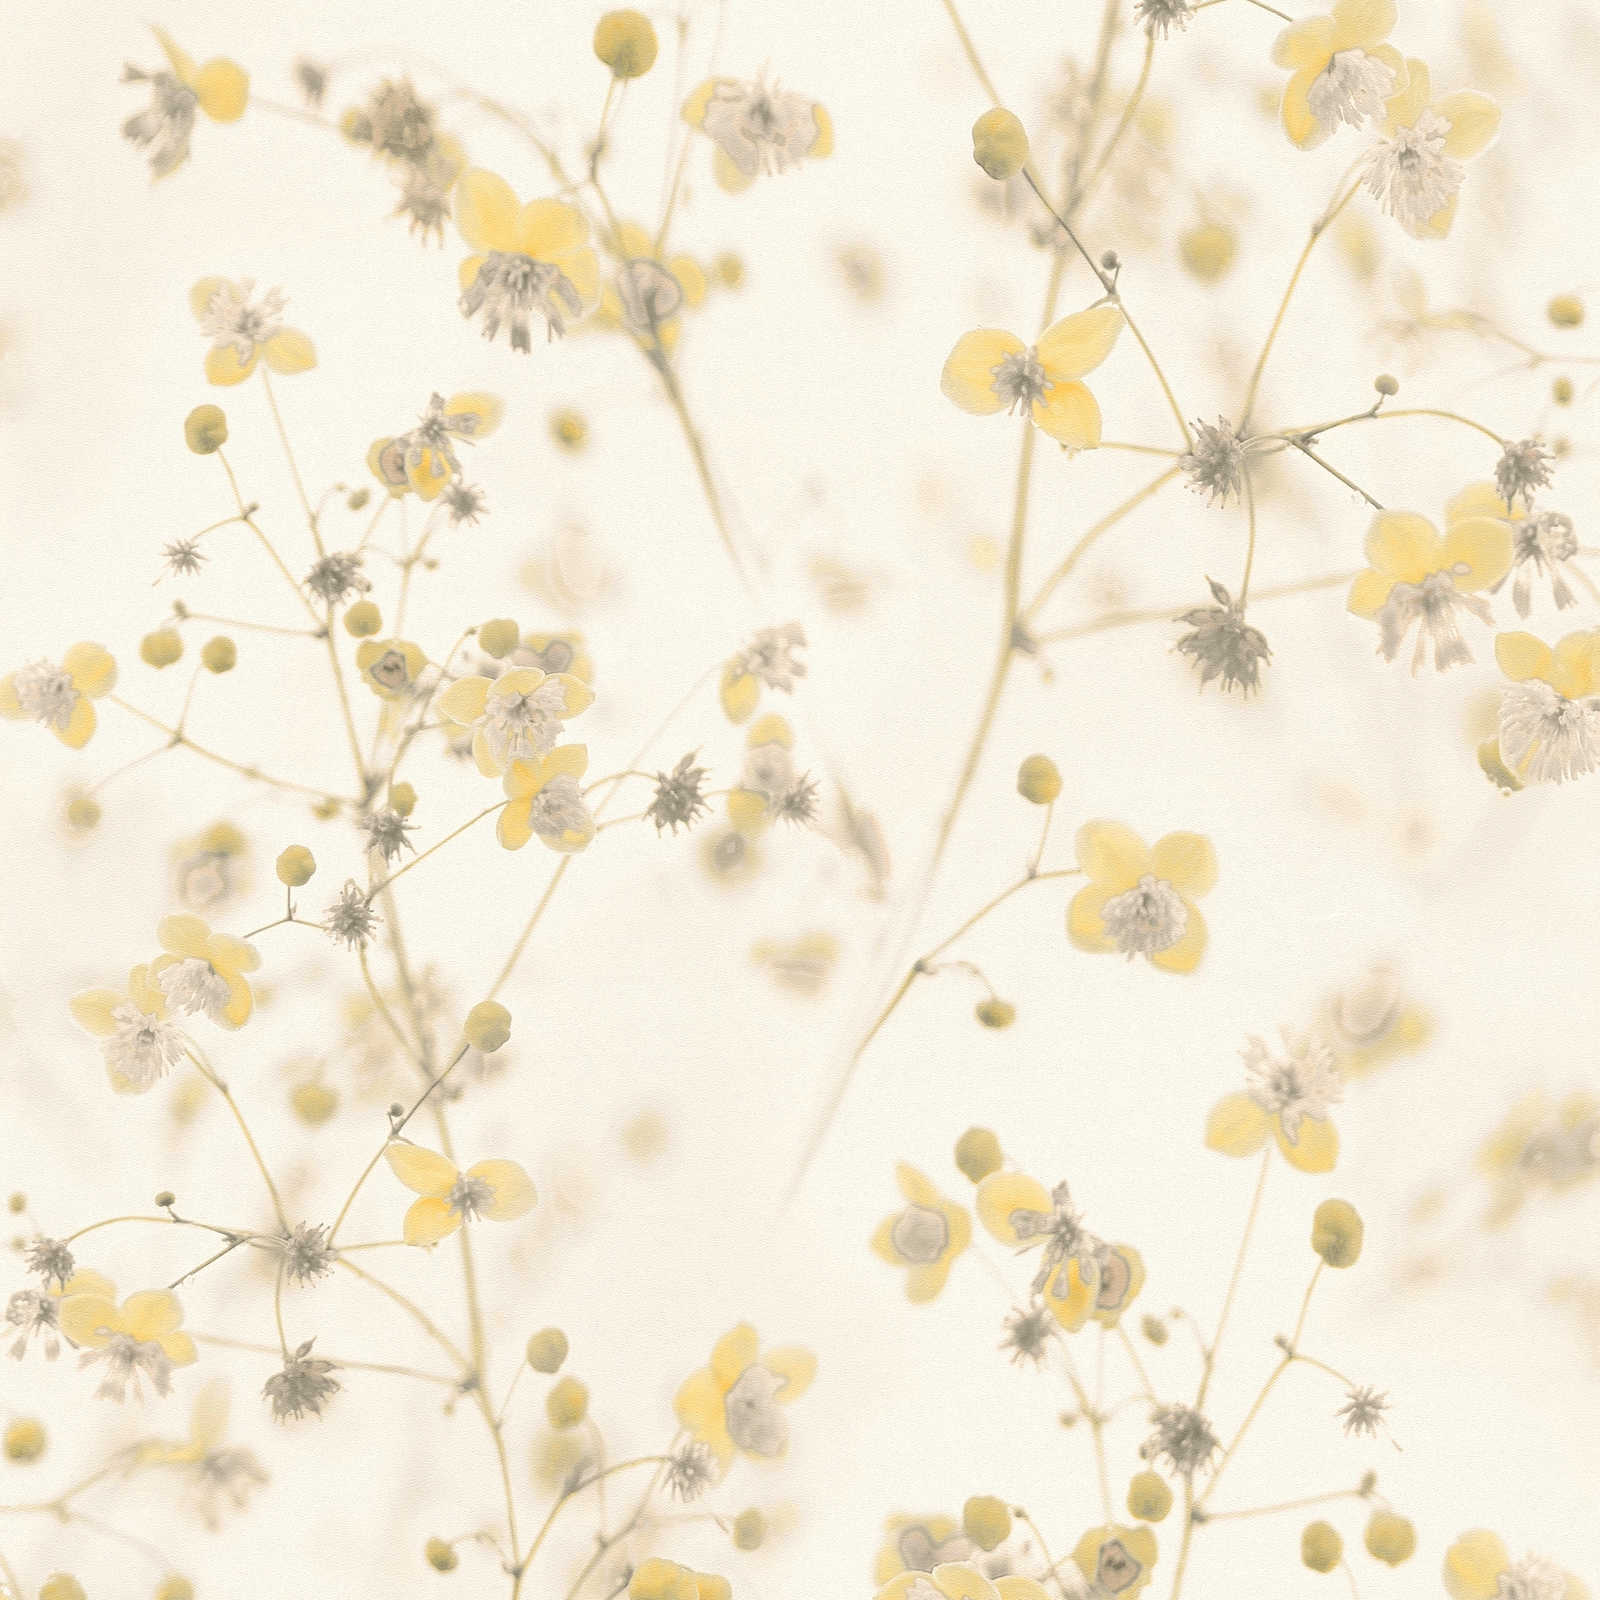         Flowers wallpaper cottage core design - cream, yellow
    